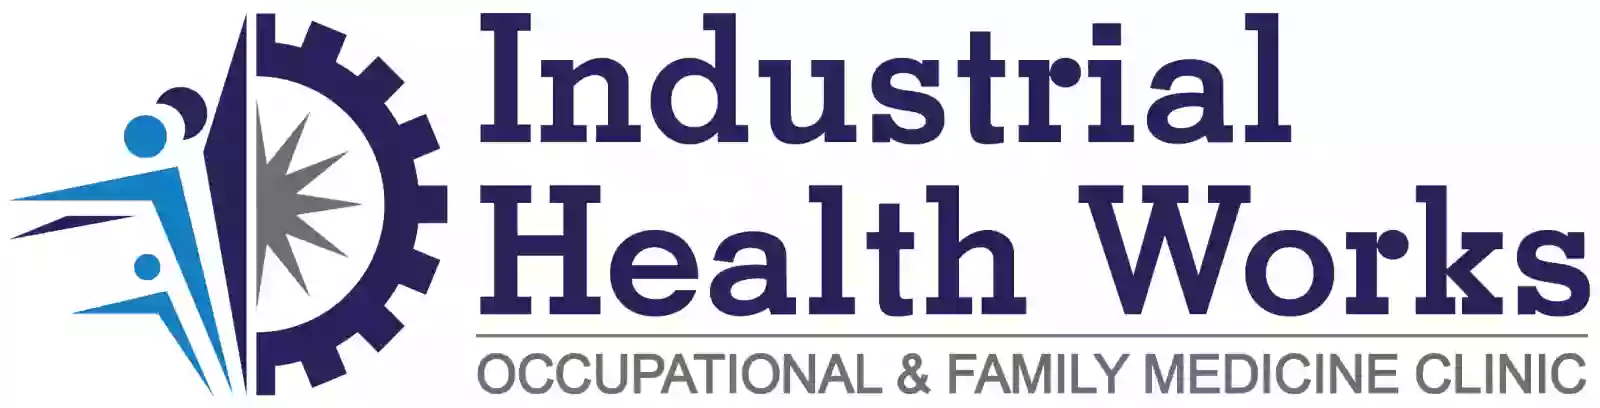 Ashley Health Family & Occupational Medicine